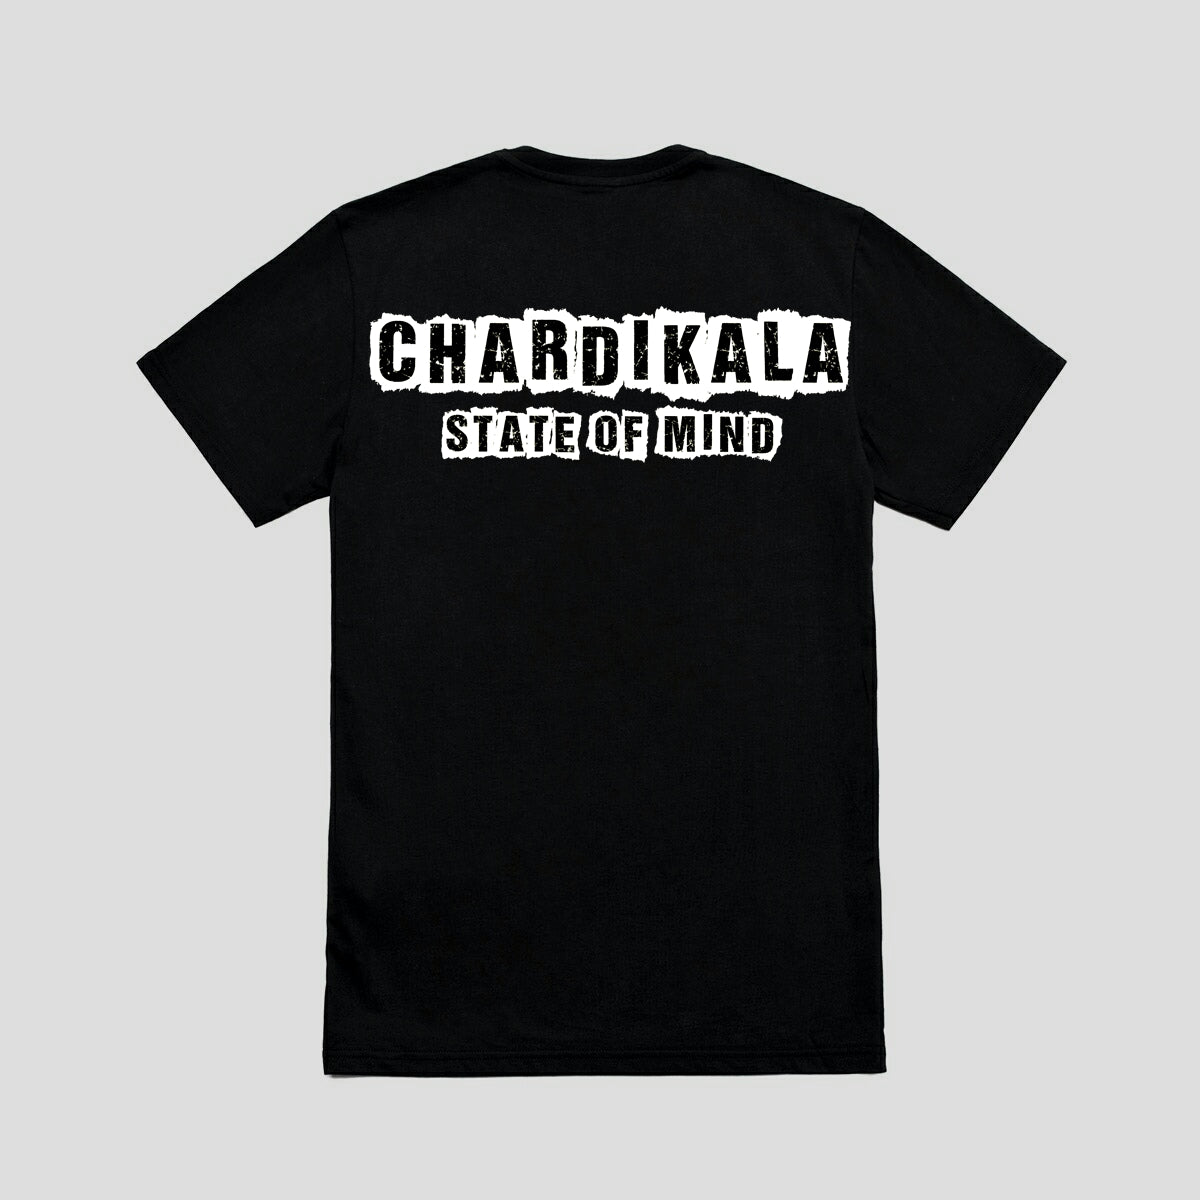 Chardikala T-Shirt / Full sleeve v2